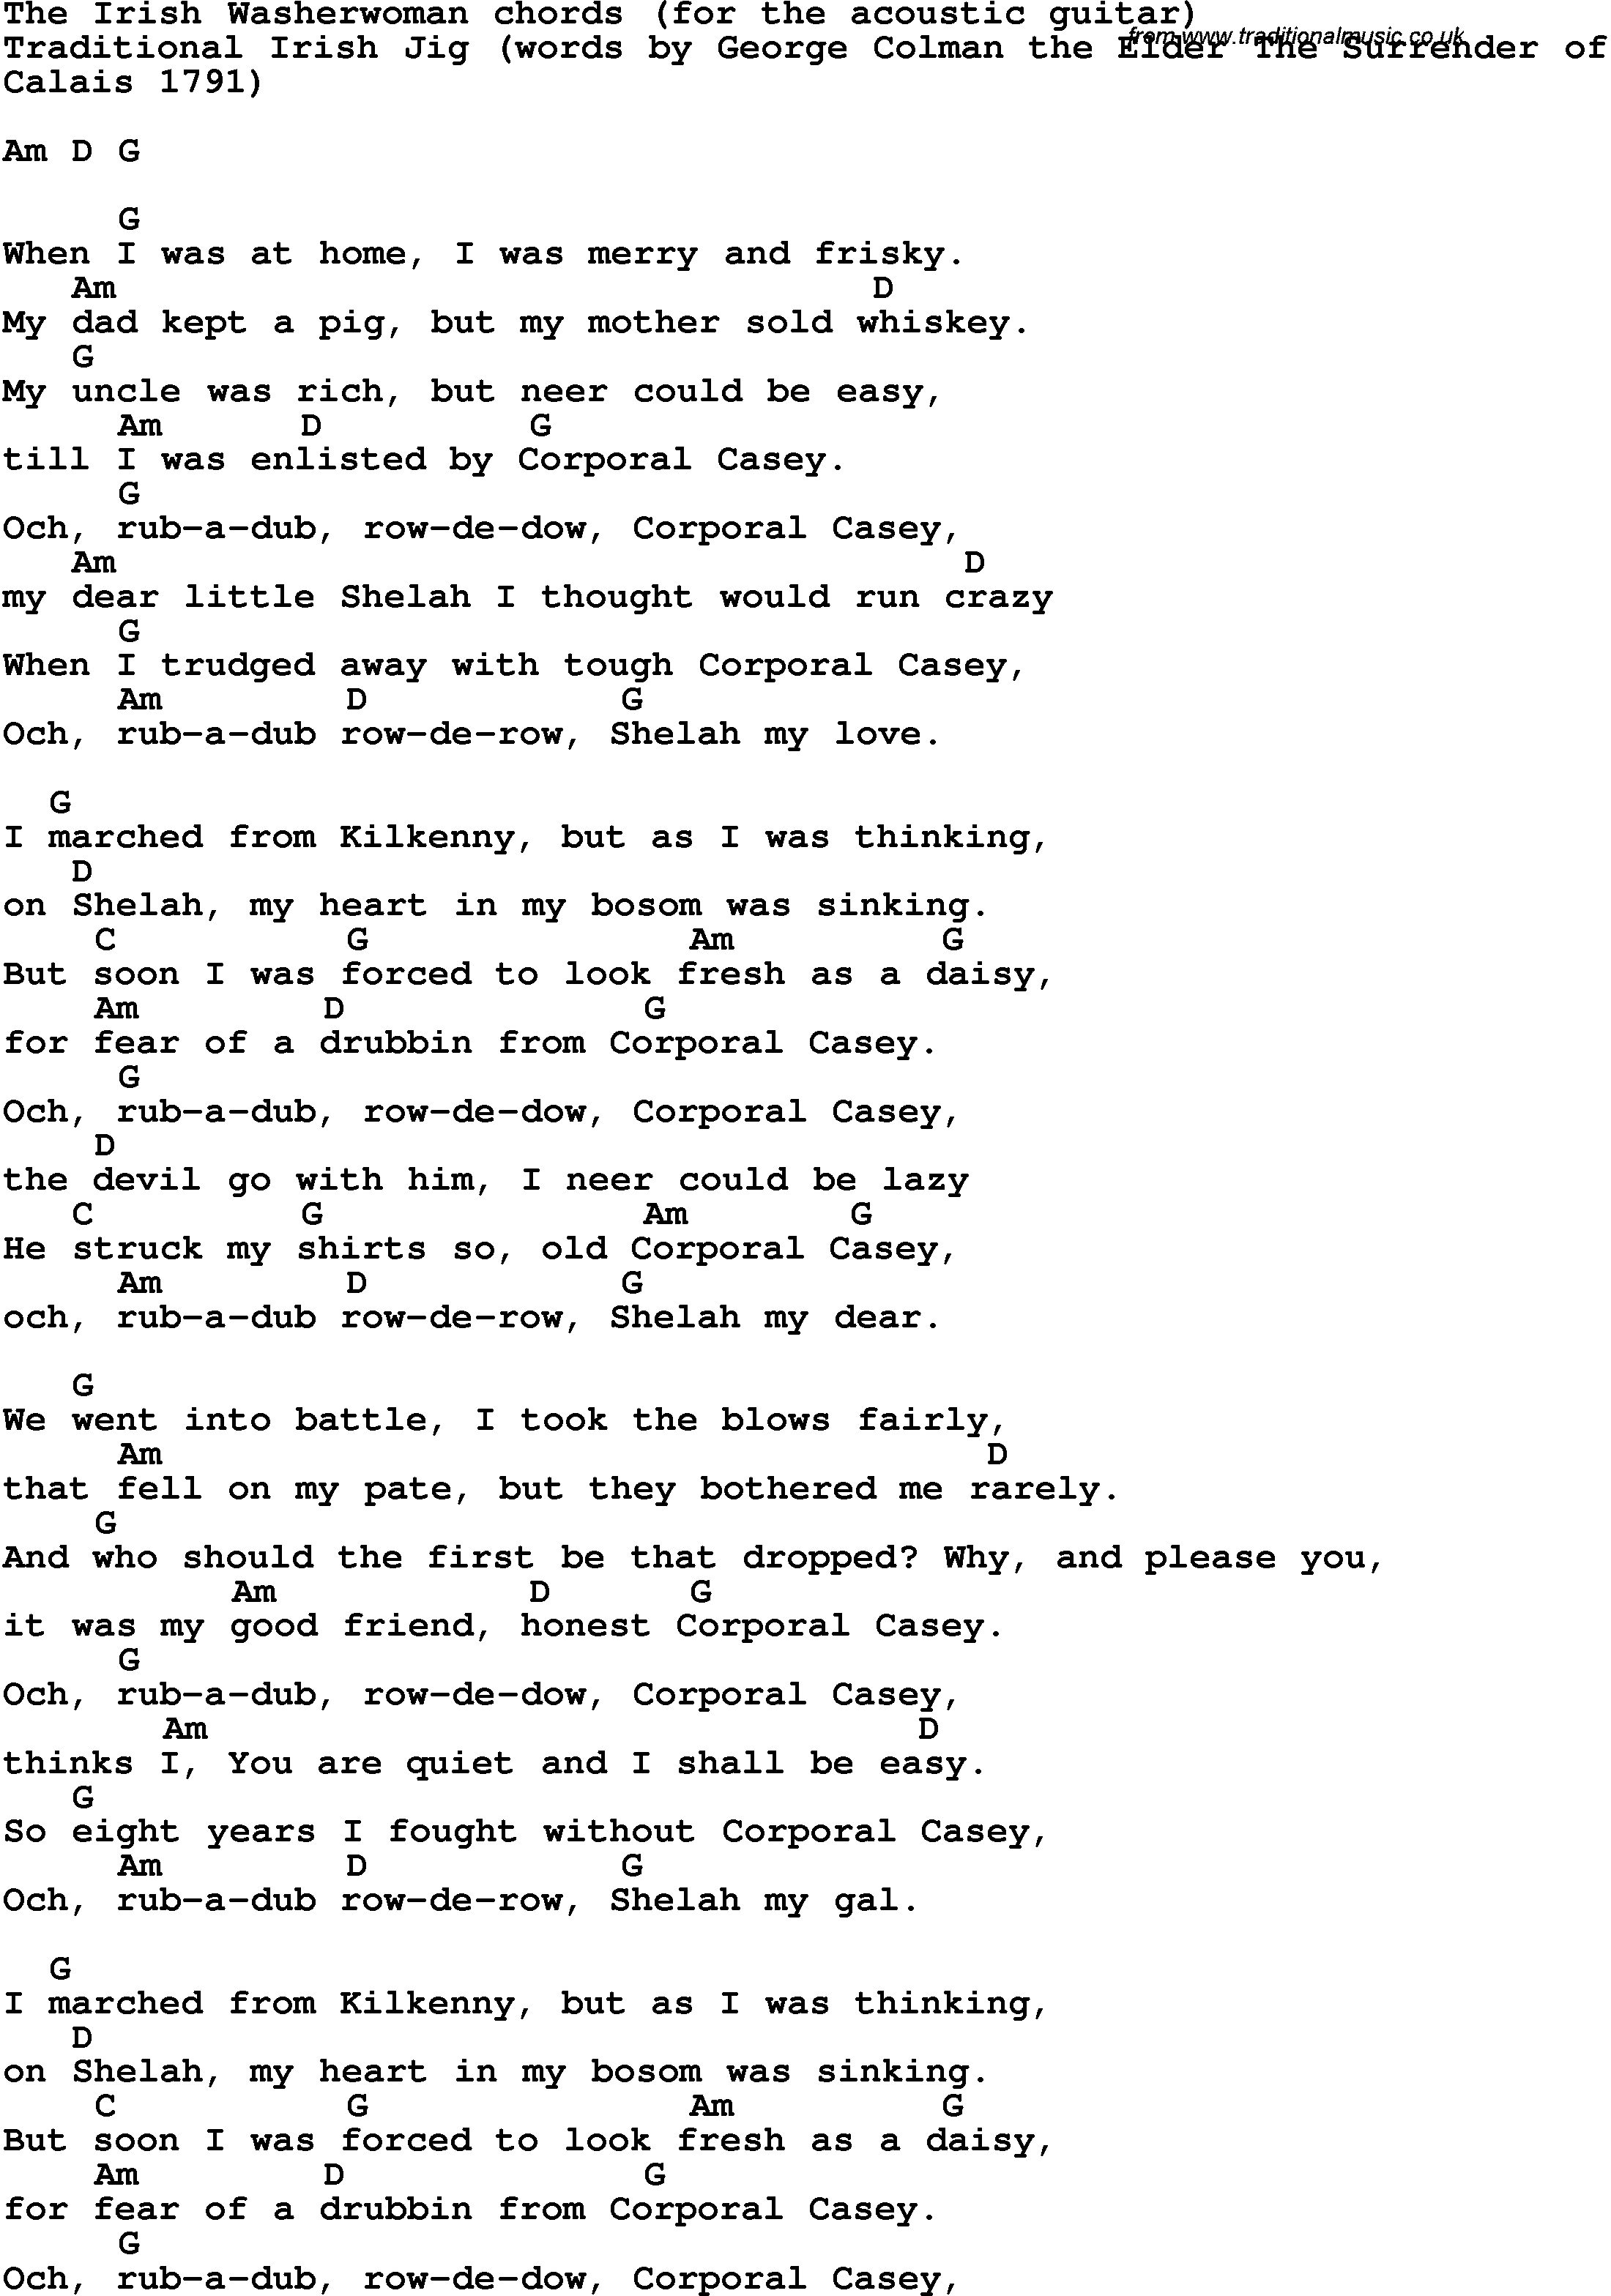 Song Lyrics with guitar chords for The Irish Washerwoman